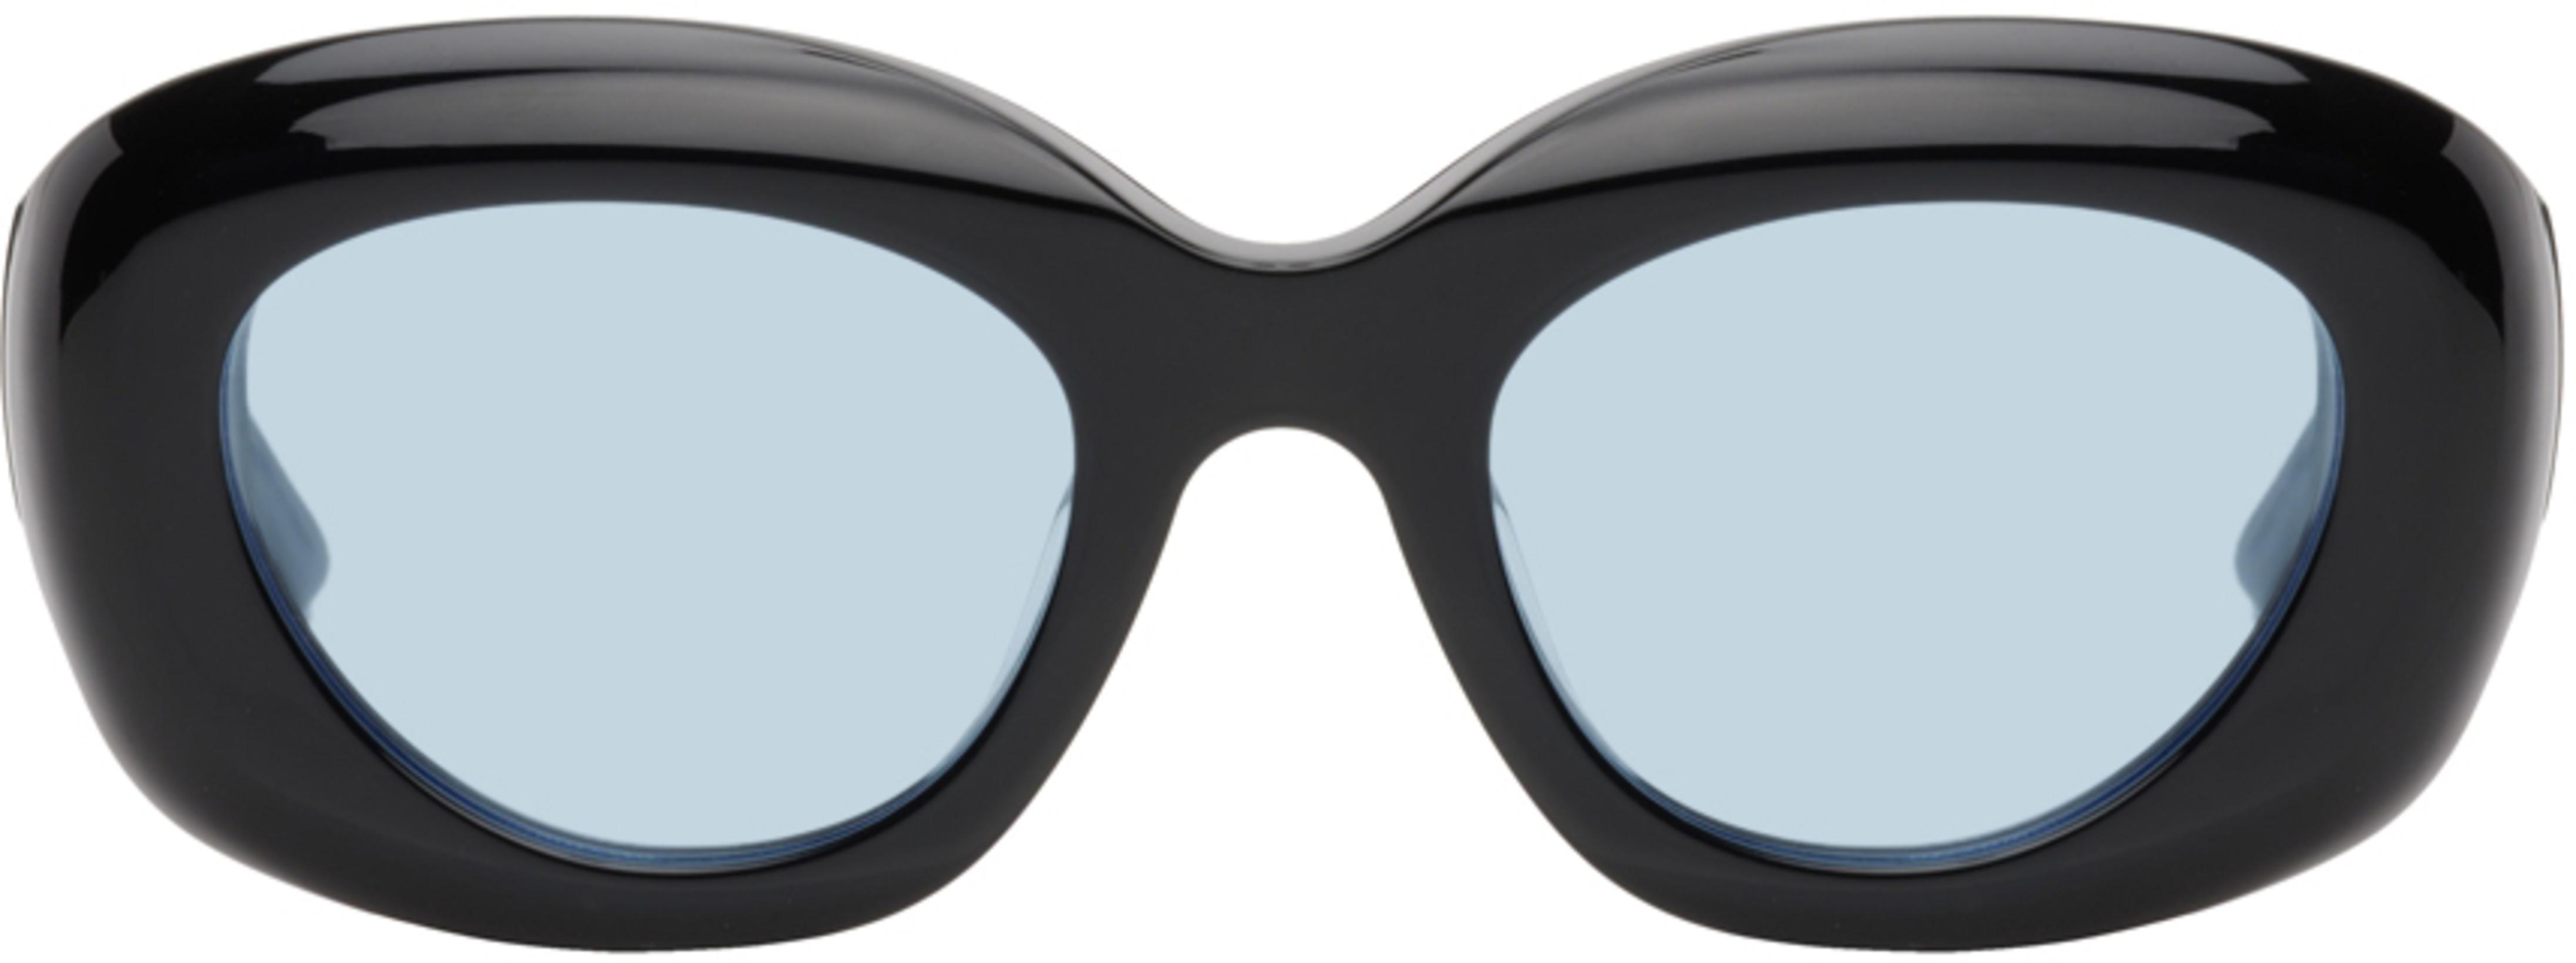 Black Portal Sunglasses by BONNIE CLYDE